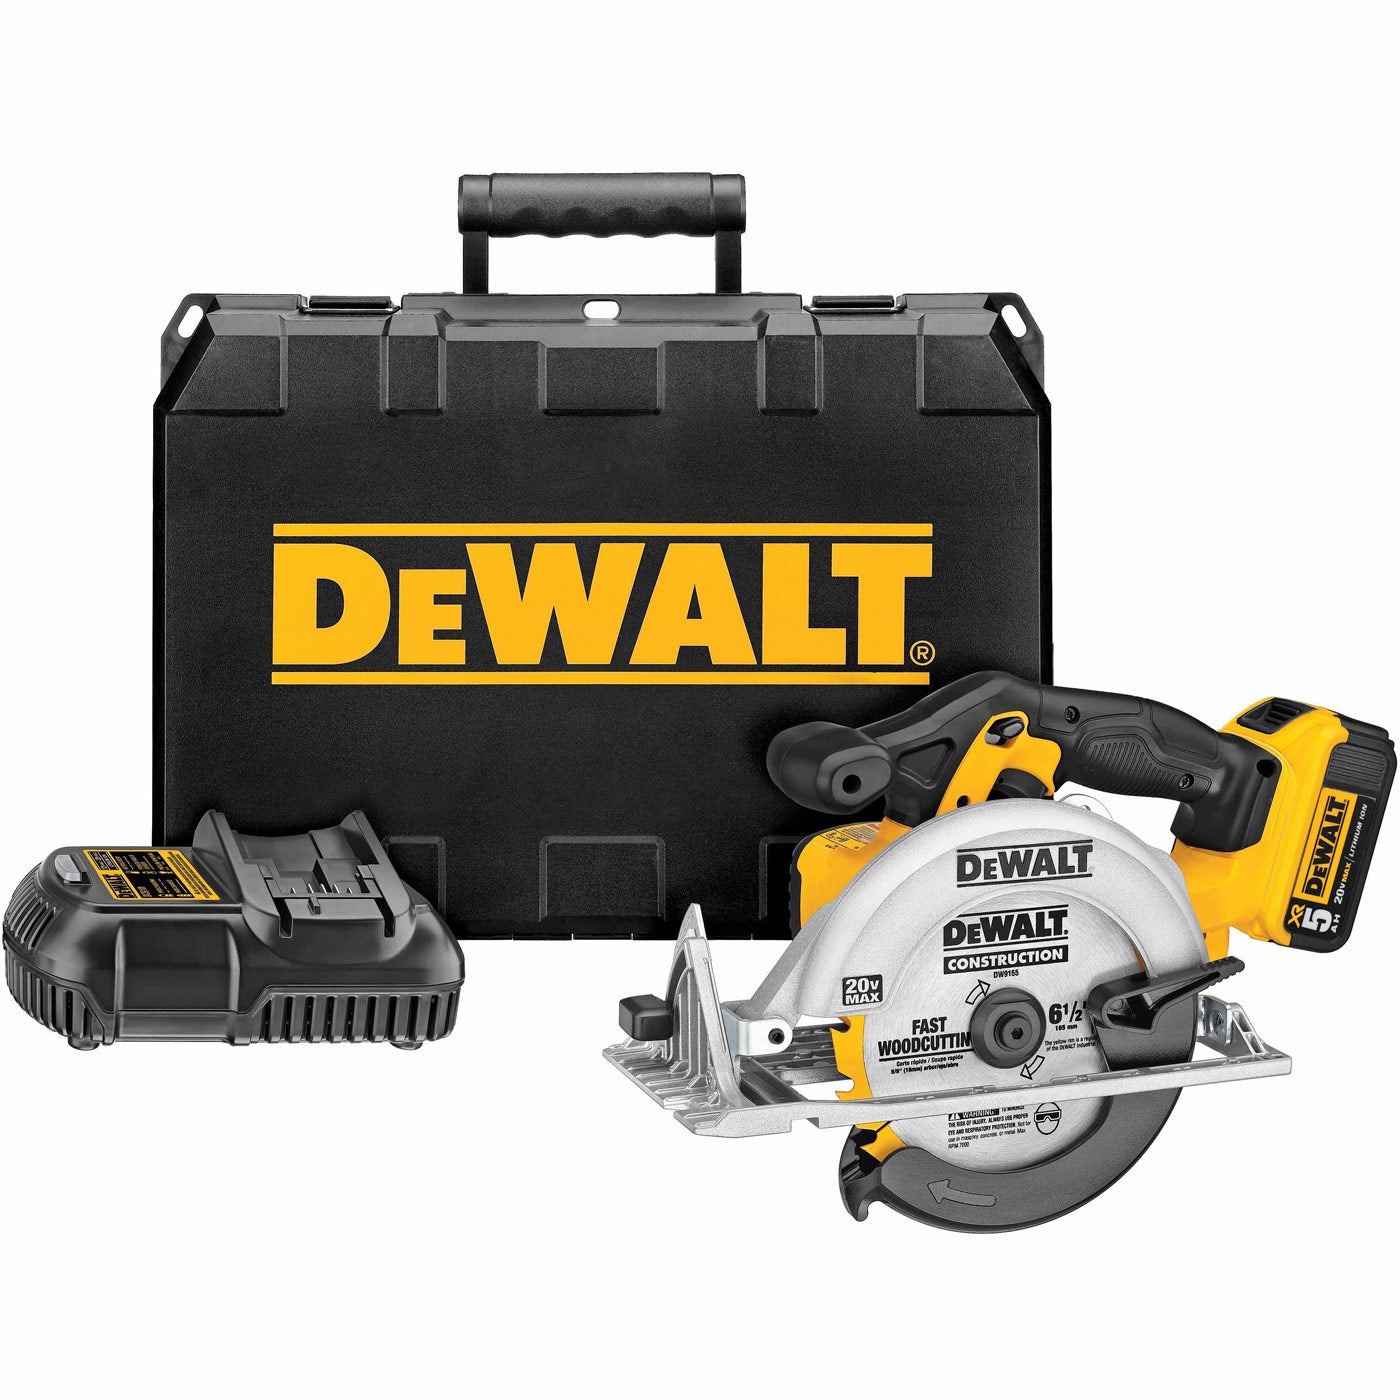 DeWalt DCS391P1 20V MAX Li-Ion Circular Saw w/ 5.0 Ah Battery and Kit Box